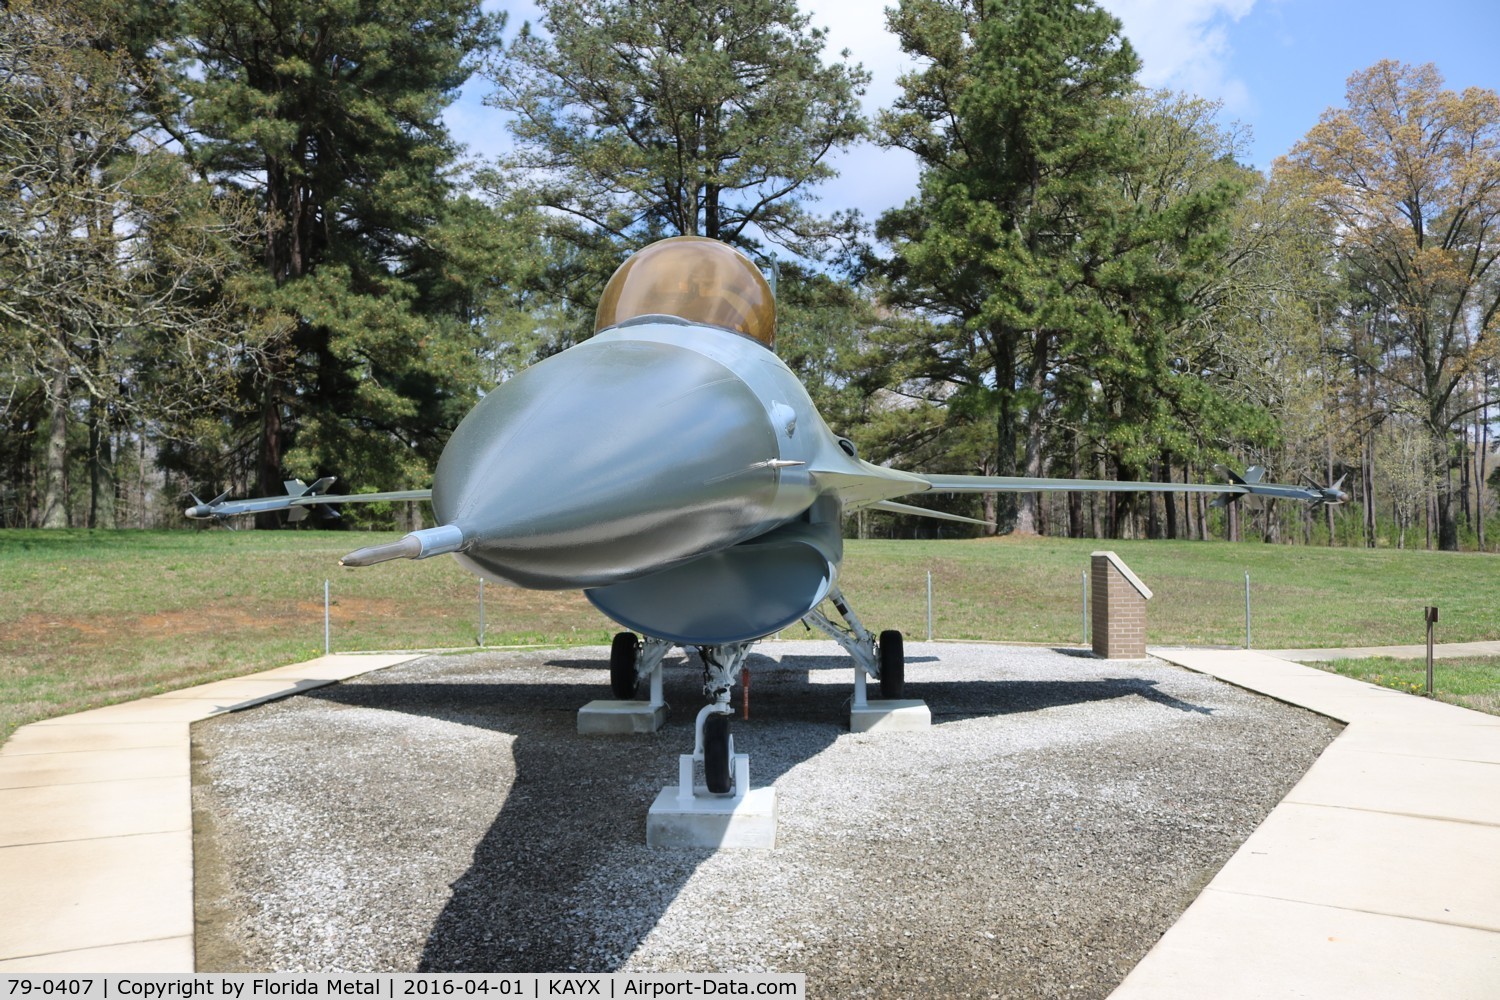 79-0407, 1979 General Dynamics F-16A Fighting Falcon C/N 61-192, F-16A zx